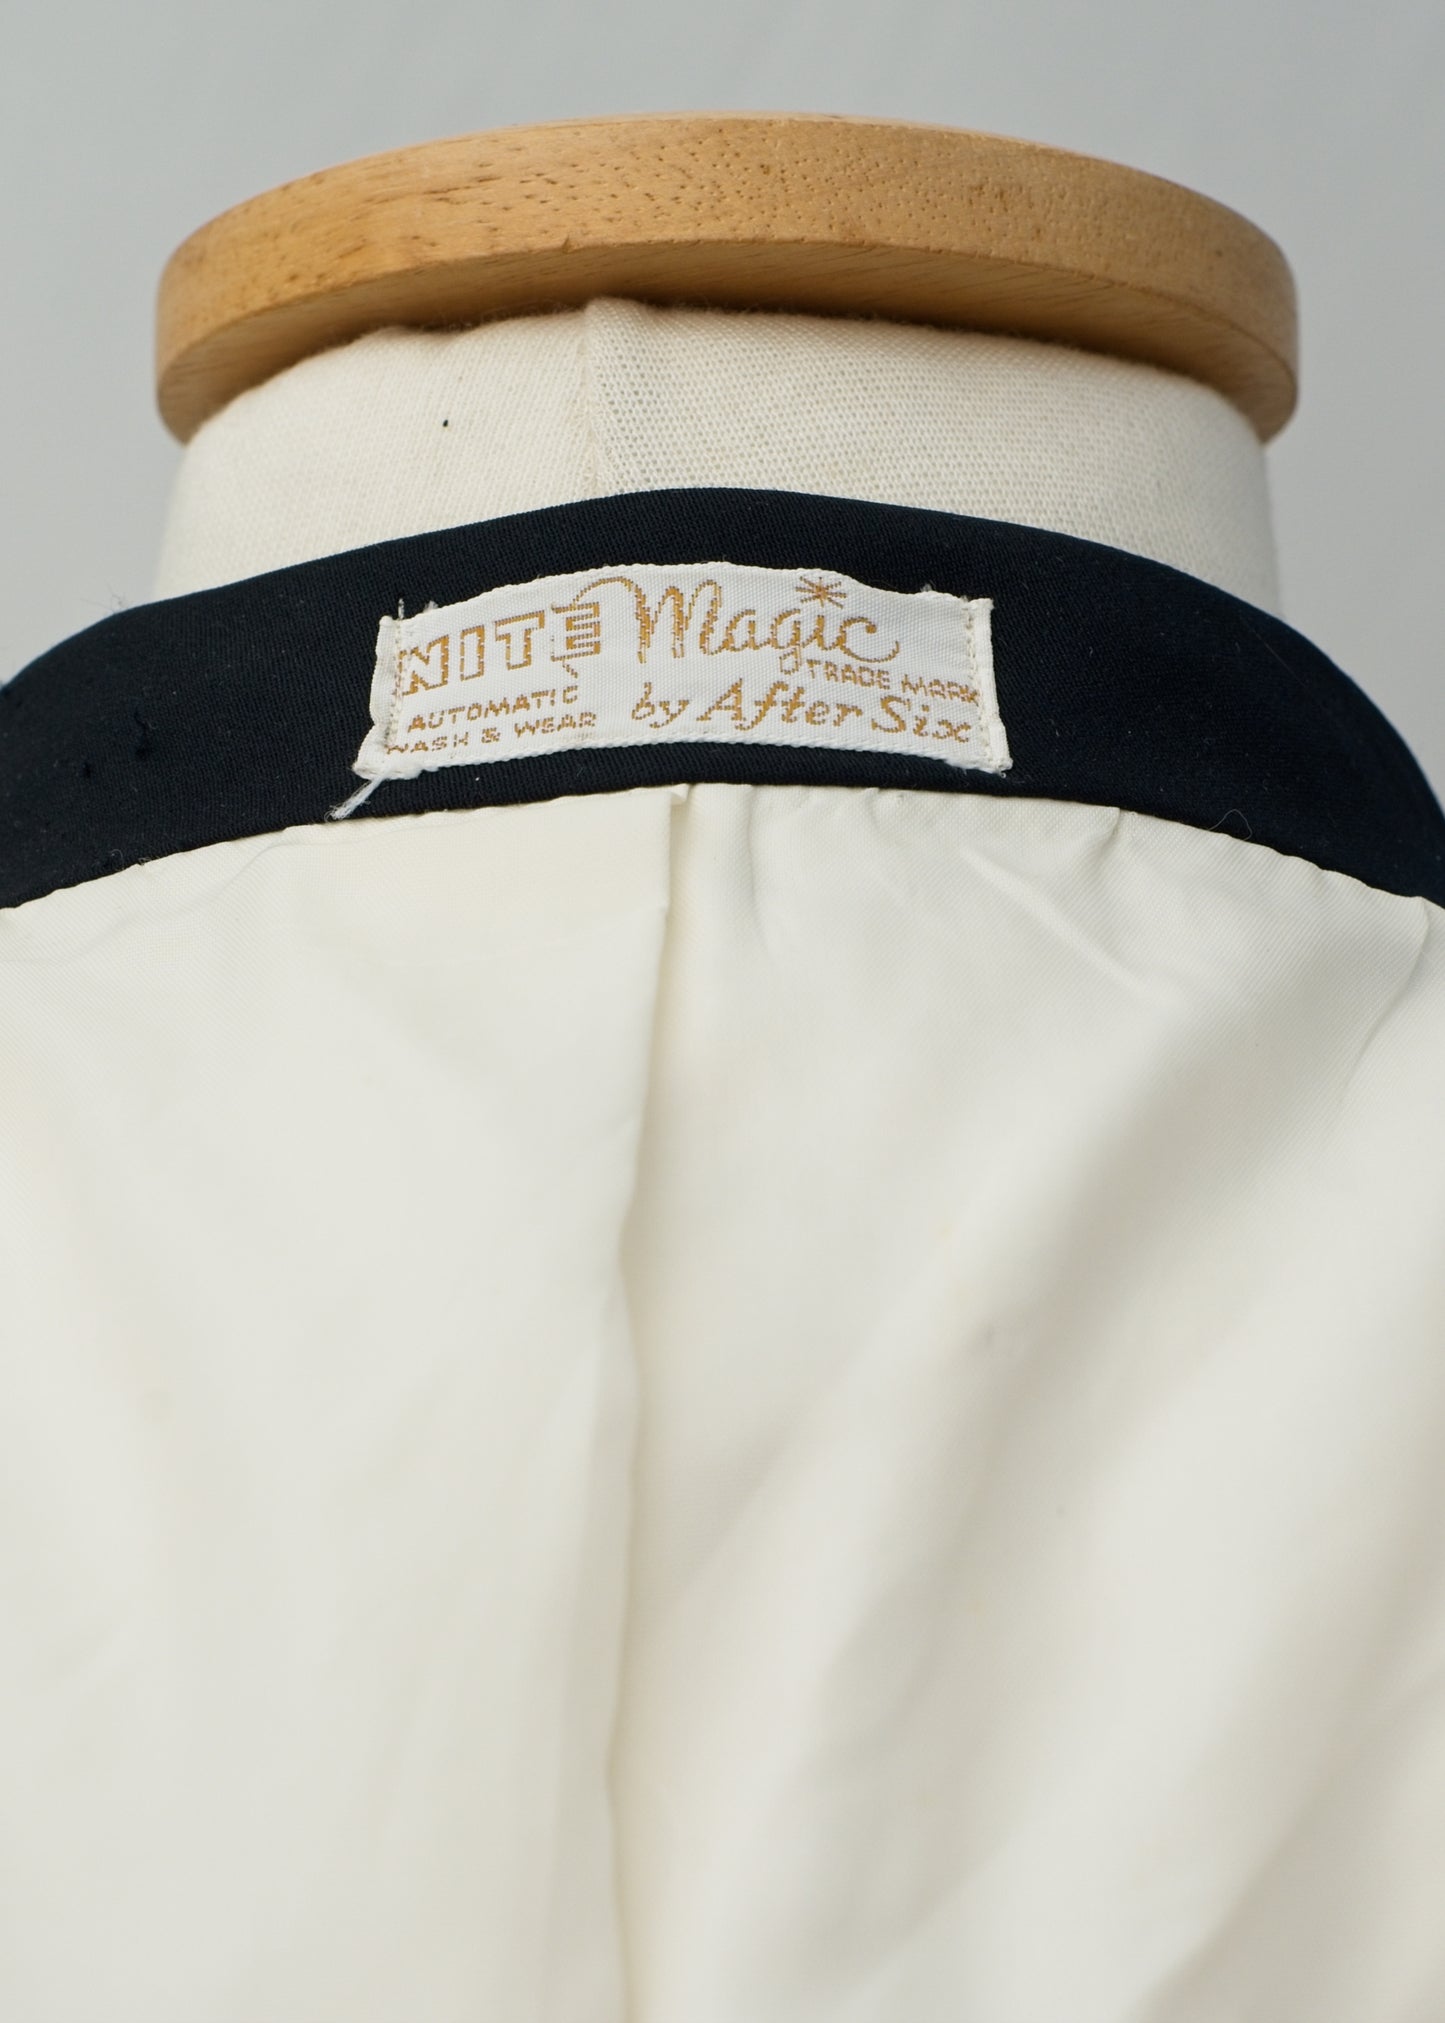 1970s Vintage White Tuxedo Dinner Jacket • Blue Lapels • After Six • 41S